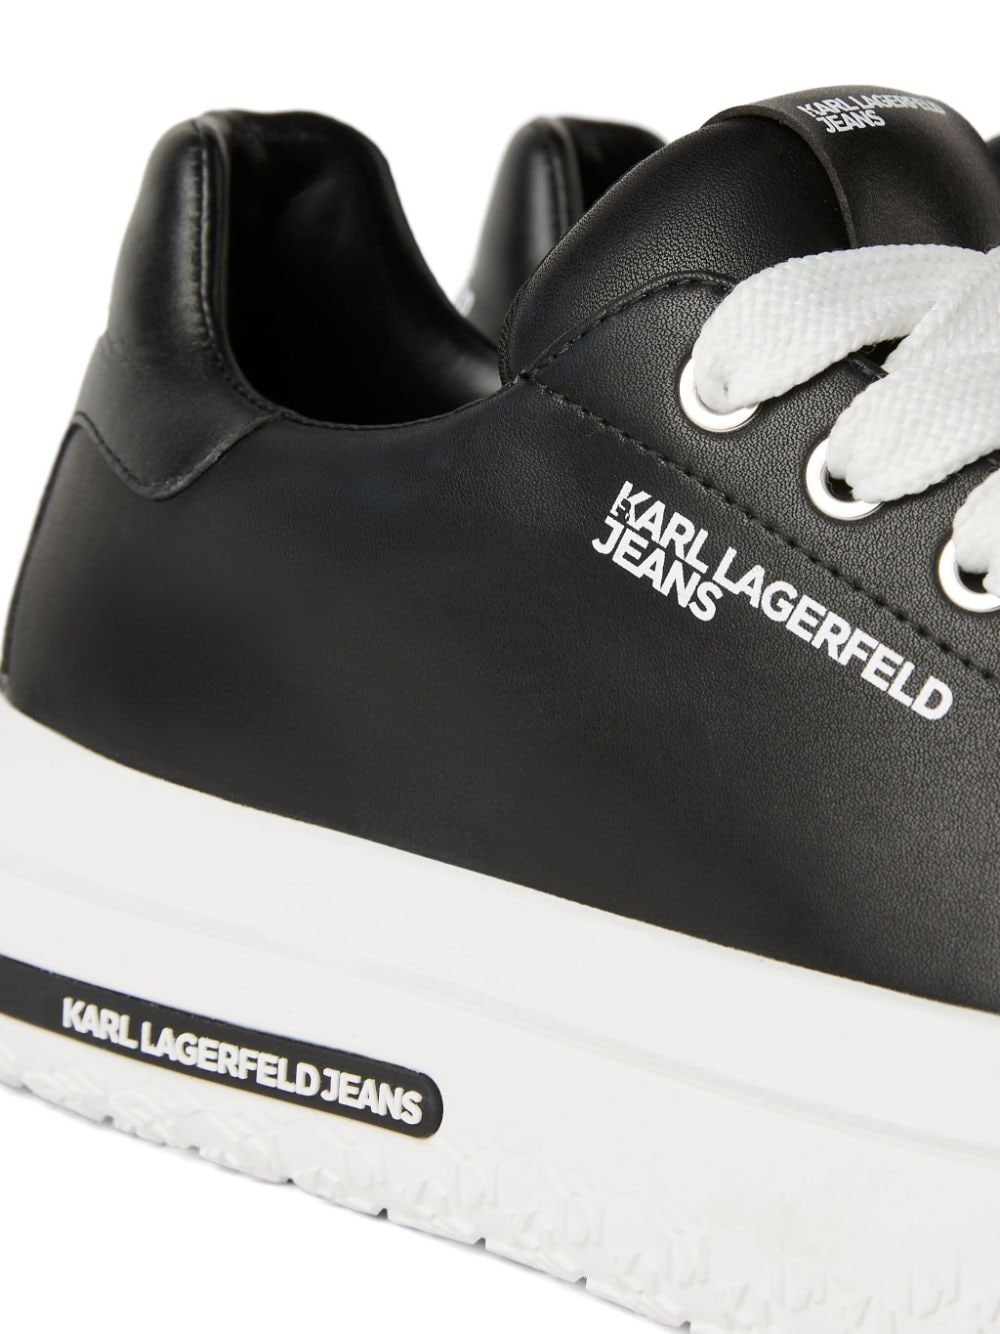 Karl Lagerfeld KLJ KUP Lace Lo leather sneakers Black